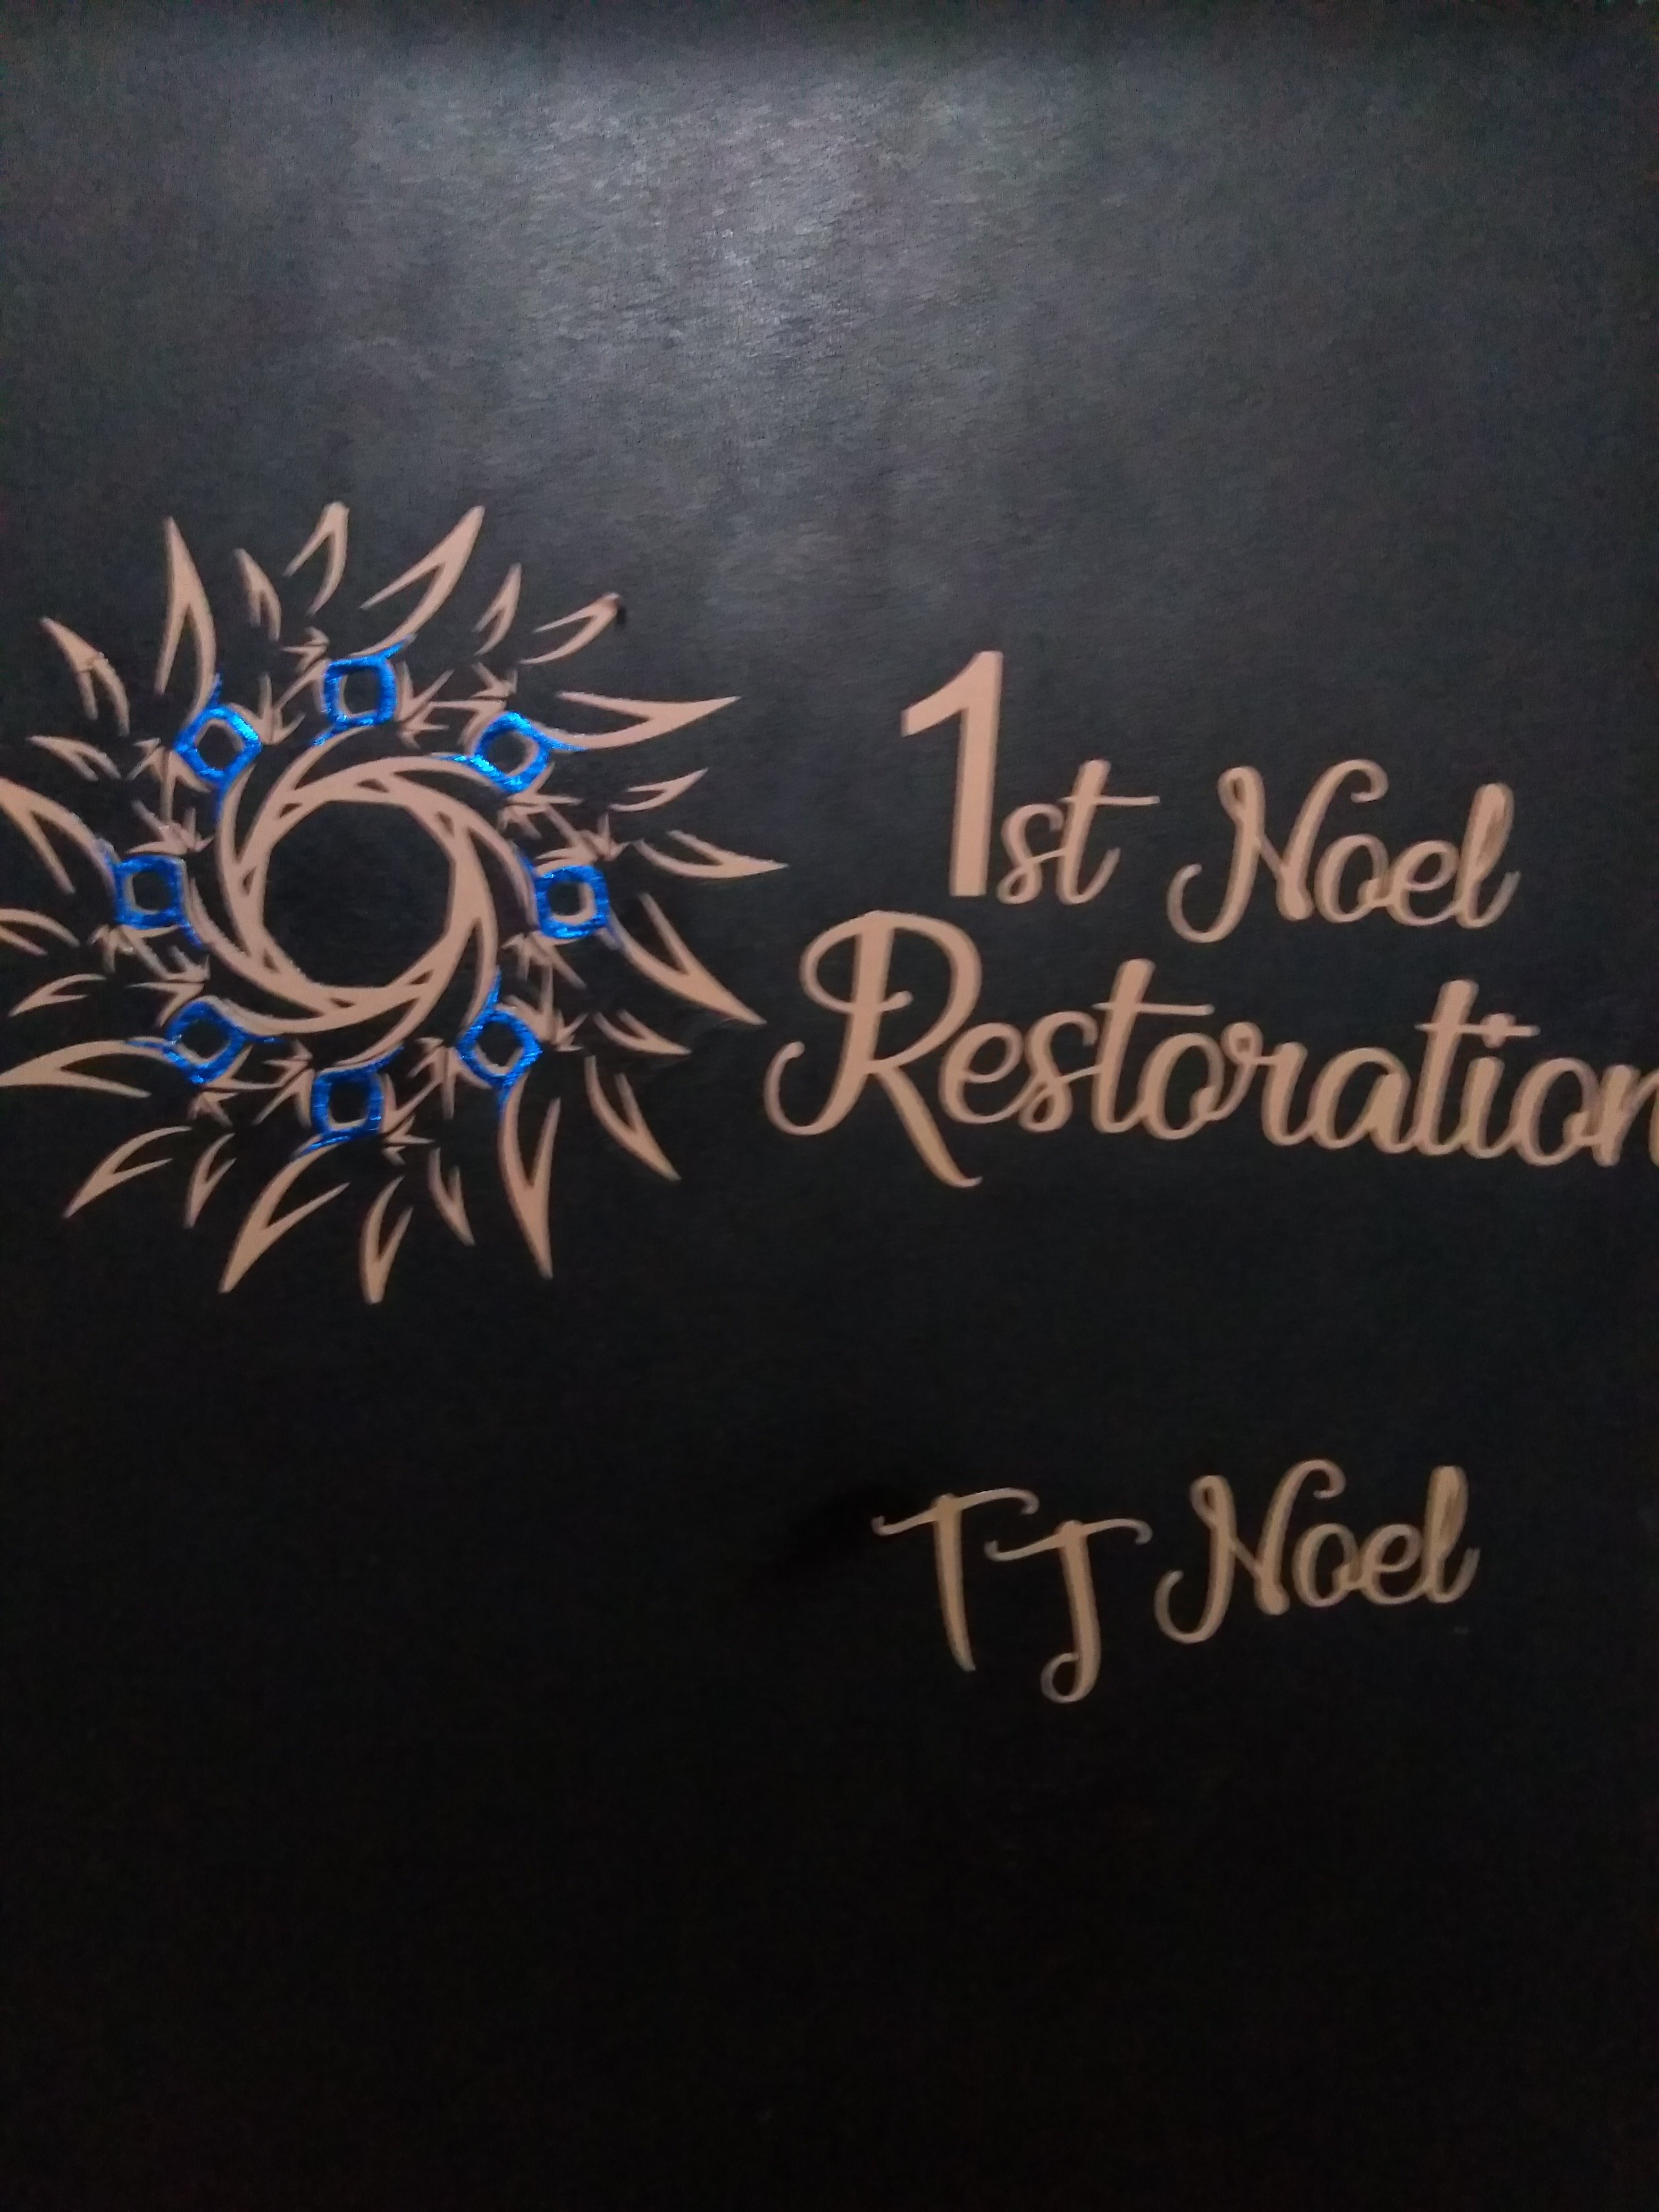 1st Noel Restorations Logo